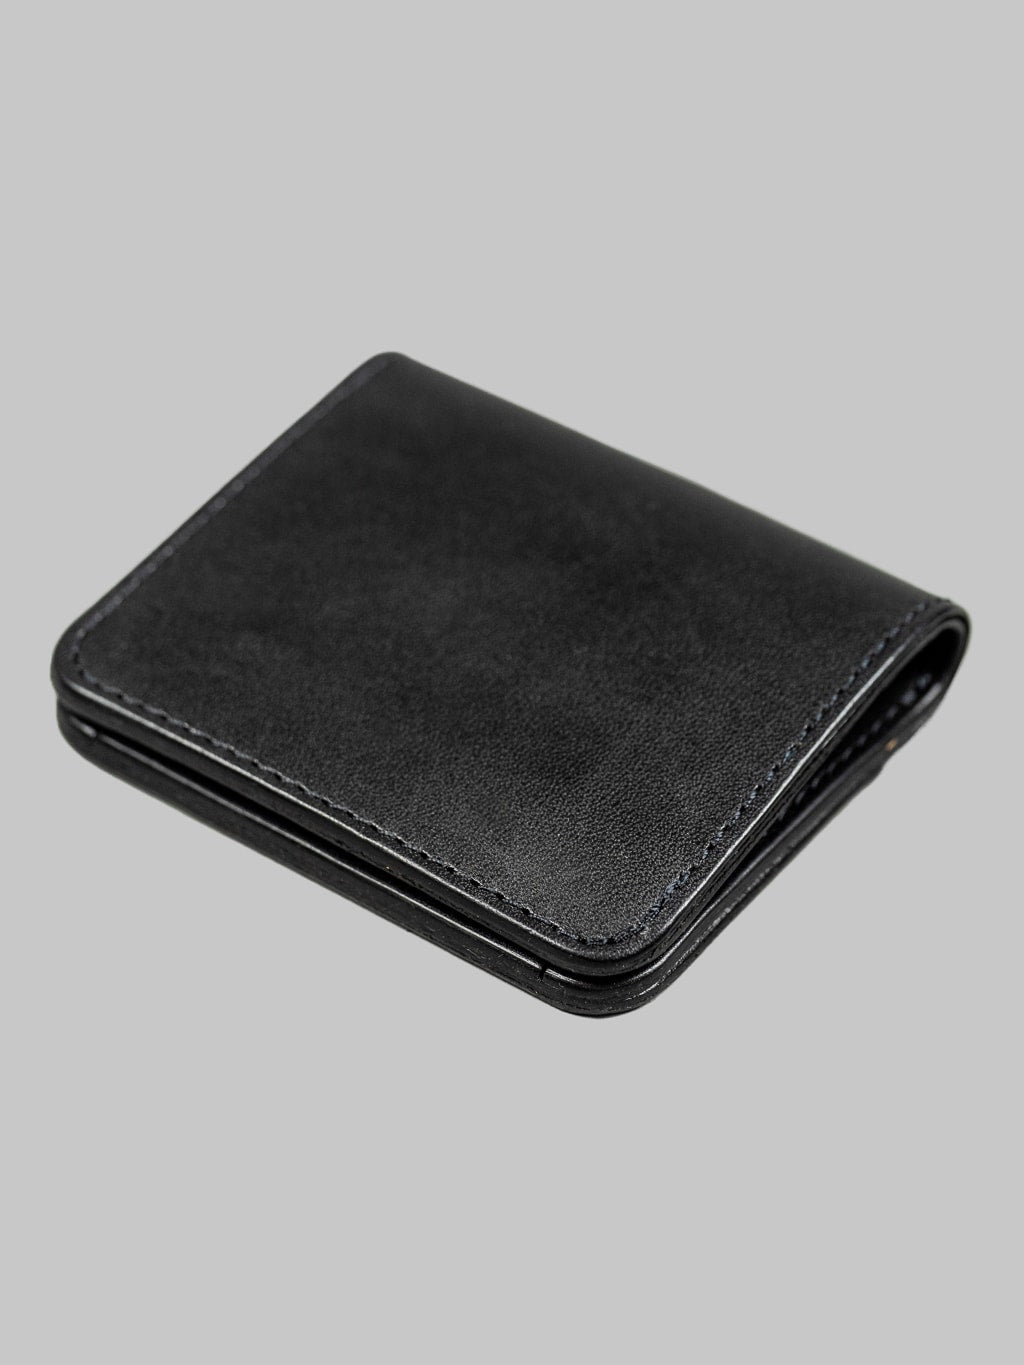 Studio Dartisan black leather mini wallet cowhide